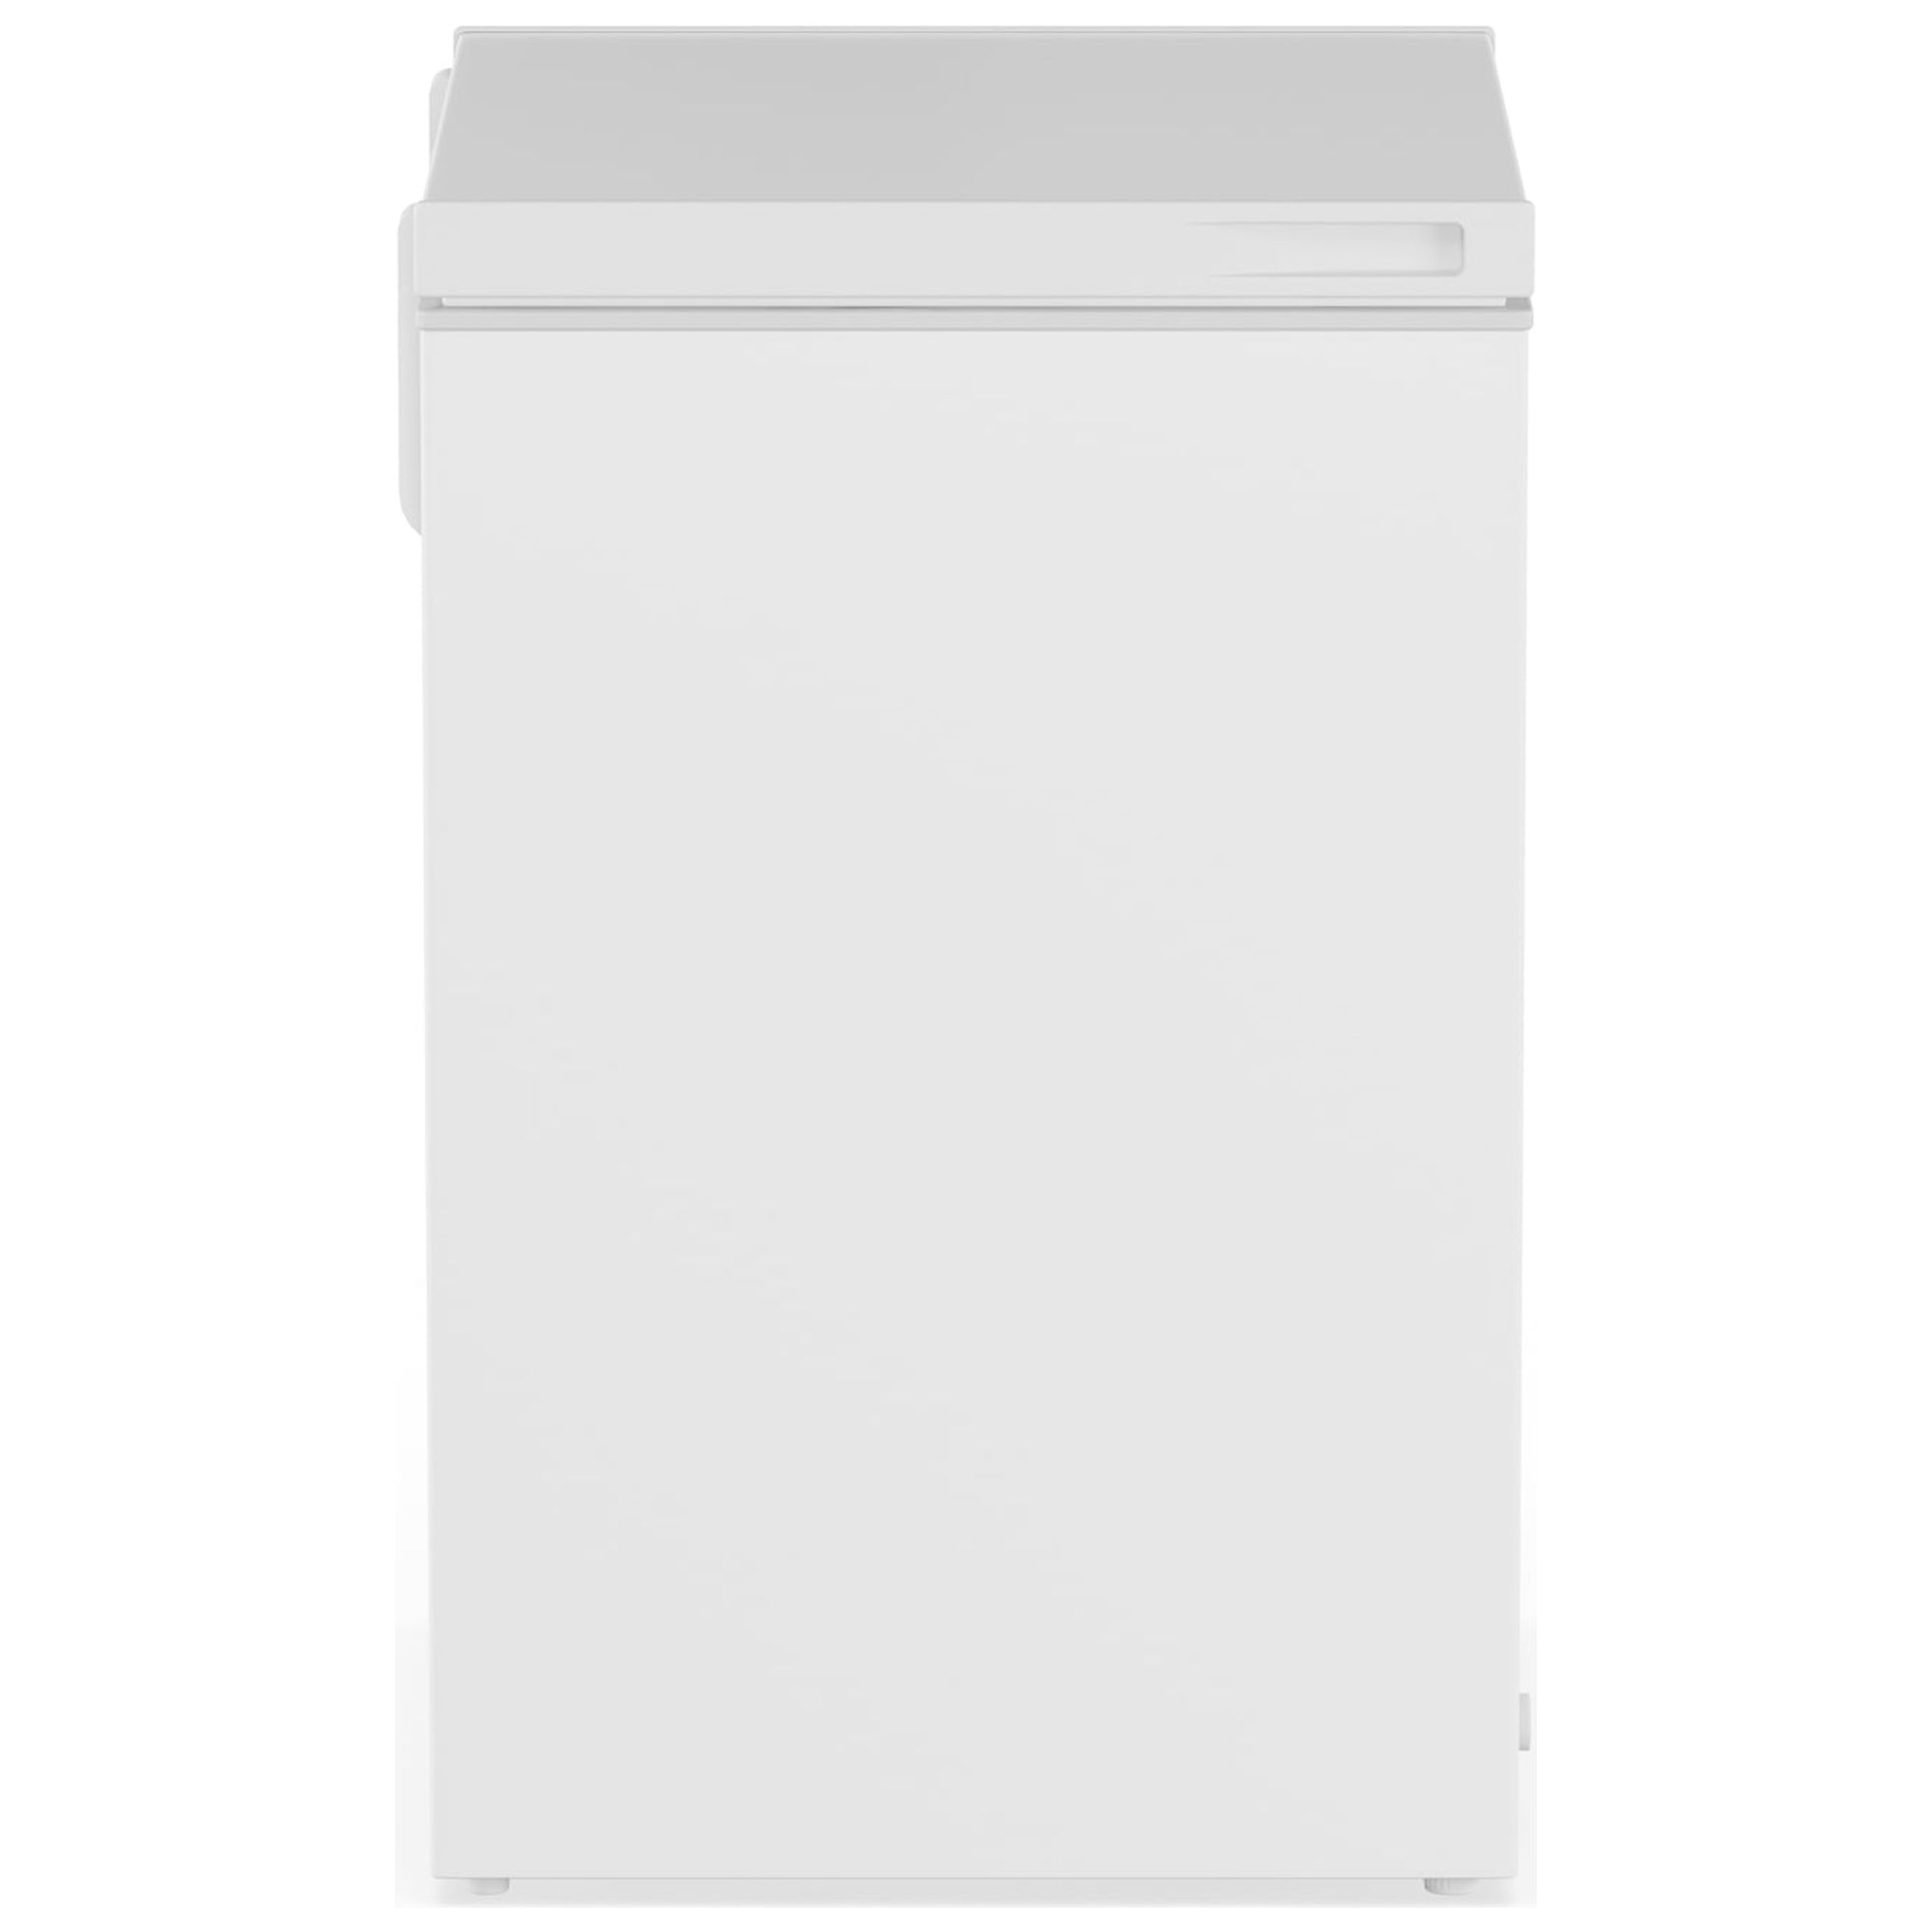 Hisense 5 Cu ft Garage Ready Chest Freezer, White Model WFC050M6XWD - image 5 of 9